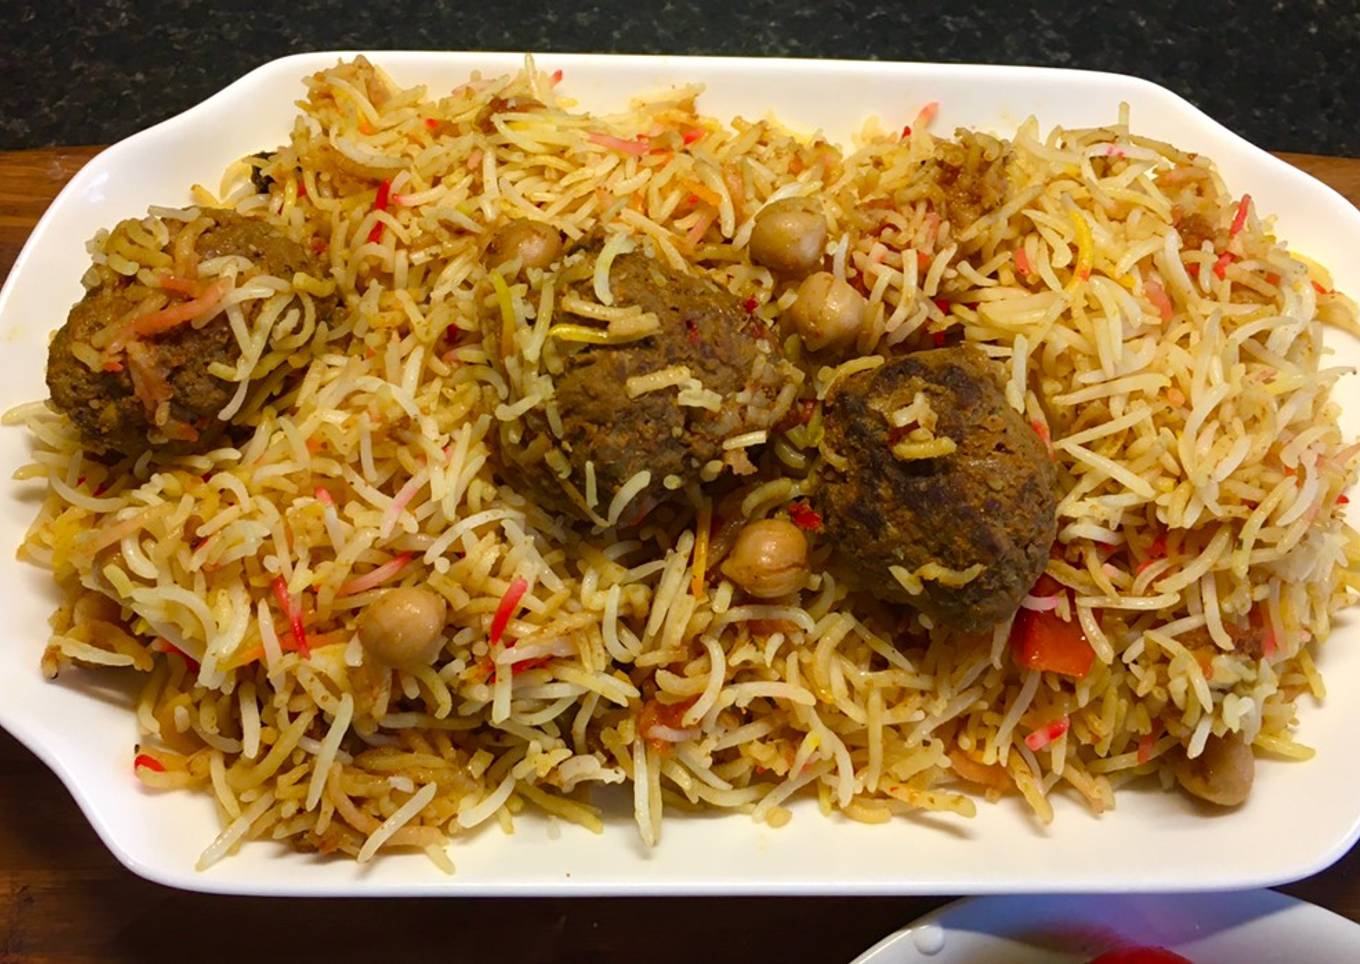 Meatballs And Chickpea Biryani (Kofta, Chana Biryani)